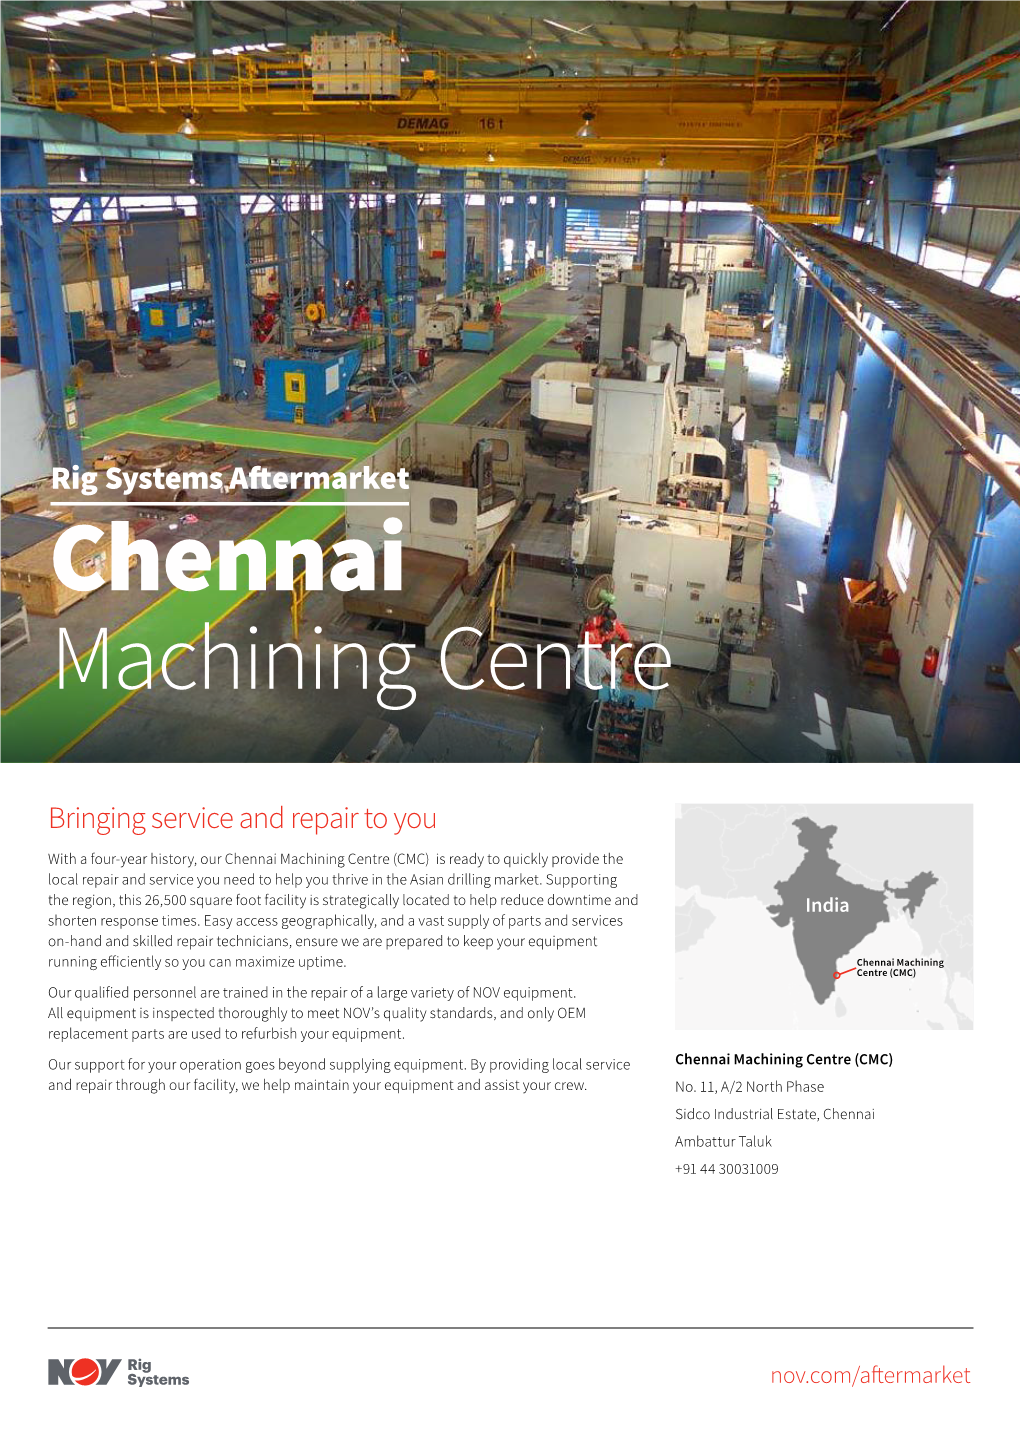 Chennai Machining Centre